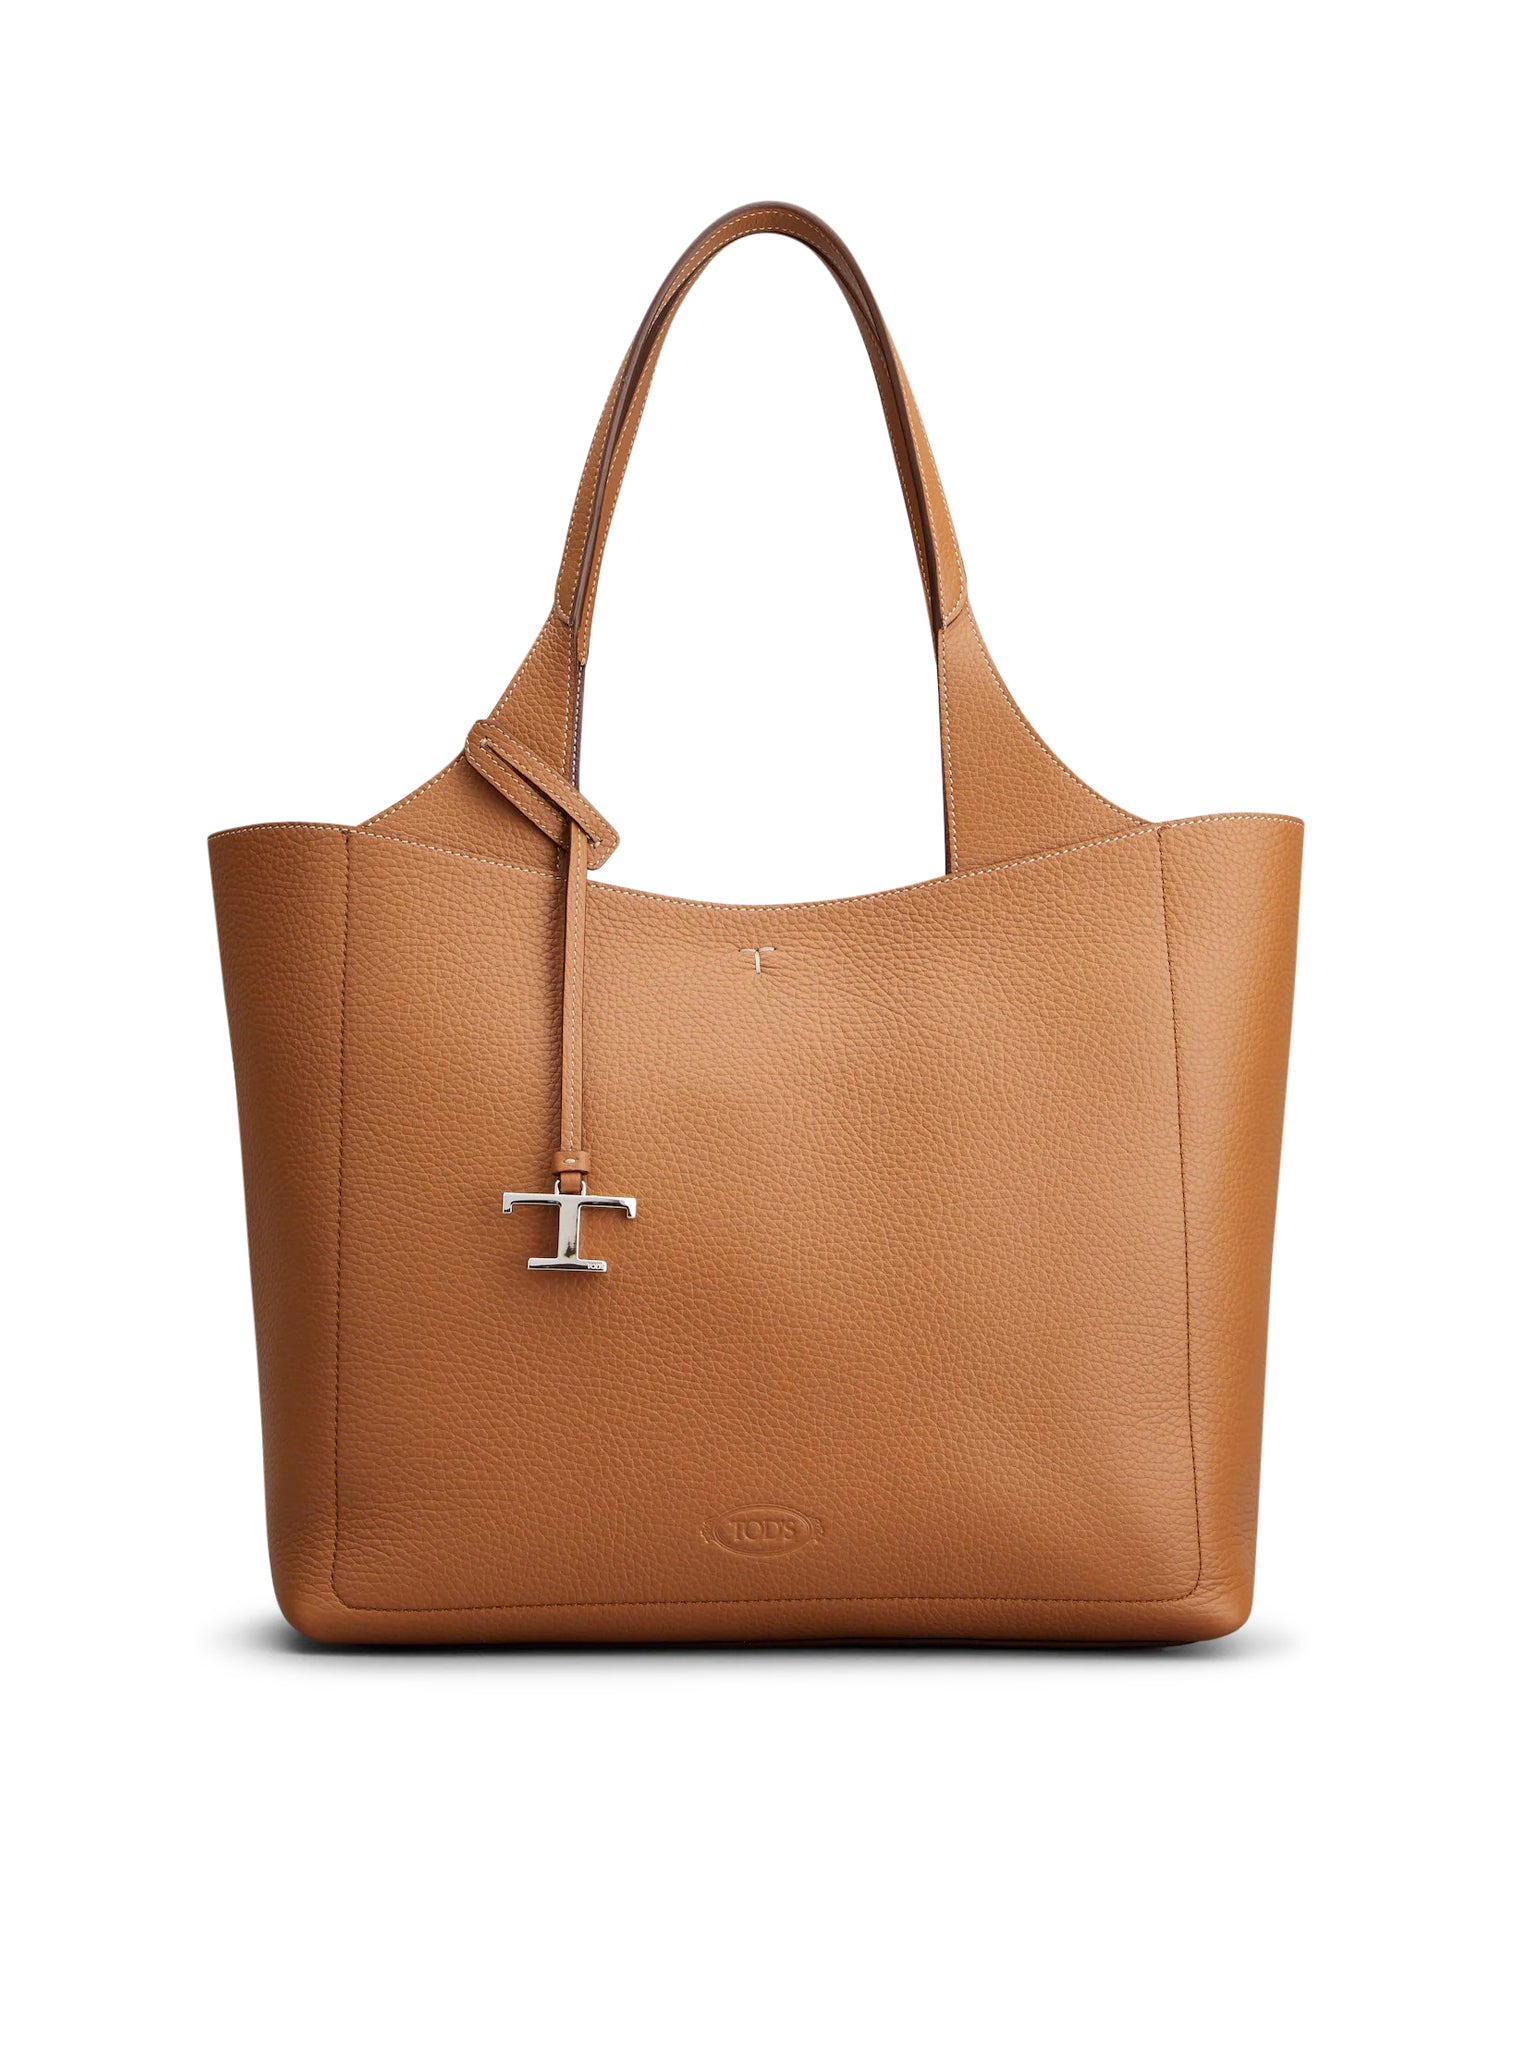 Medium Leather Shopping Bag